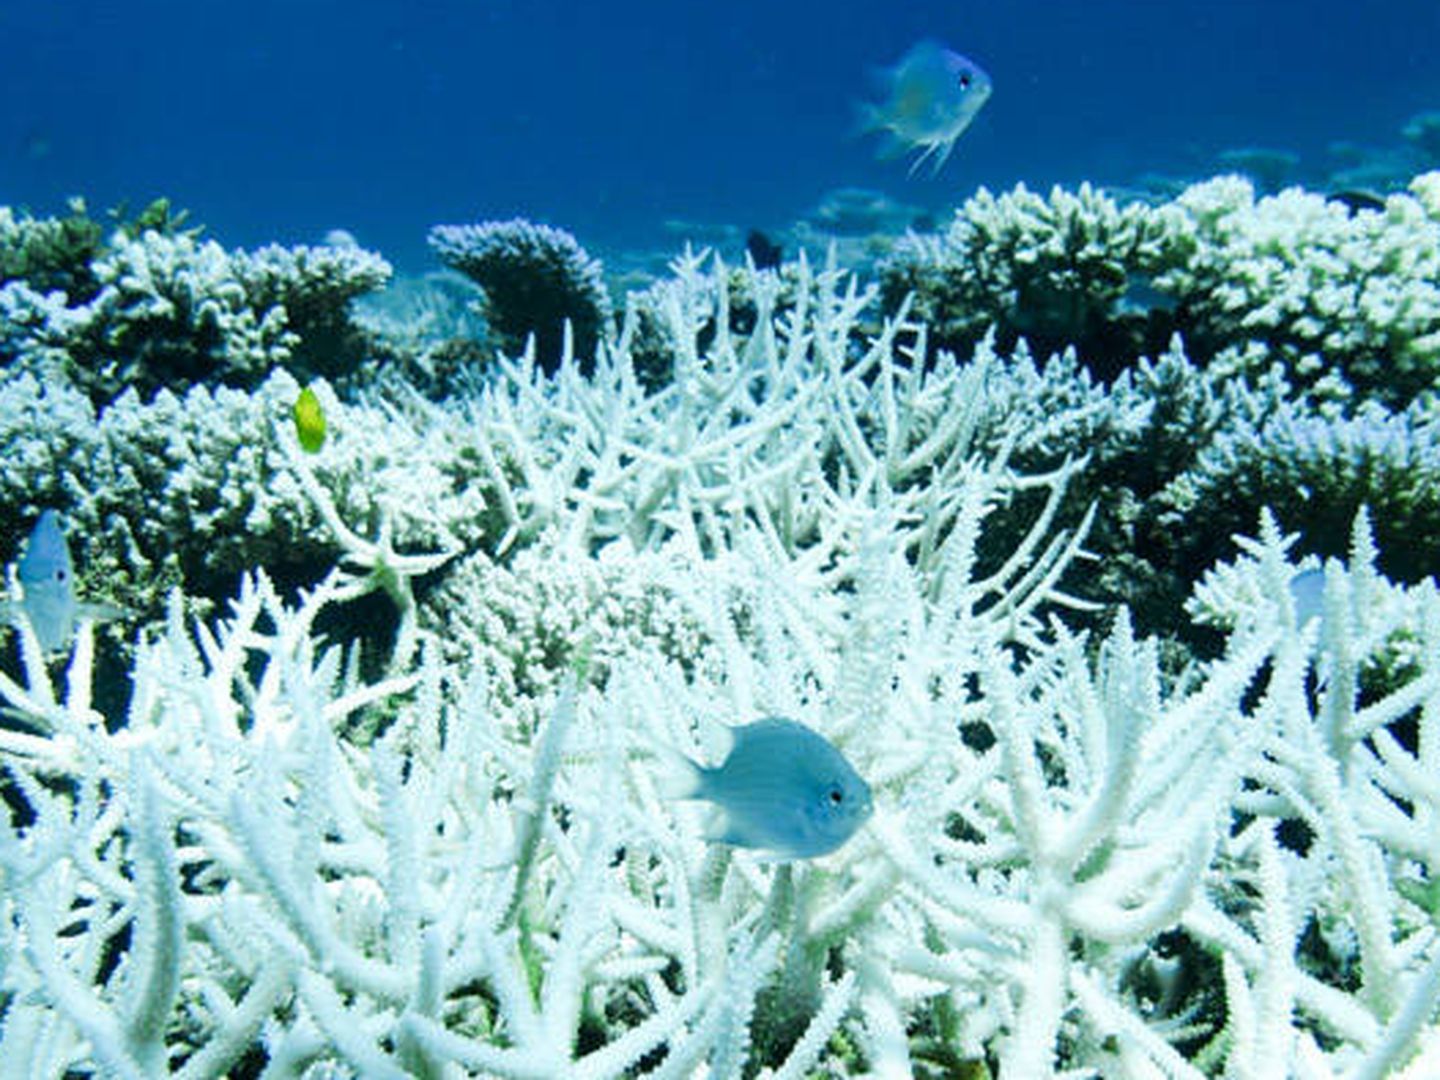 Blanqueamiento del coral en la costa australiana. Foto: Australian Institute of Marine Science